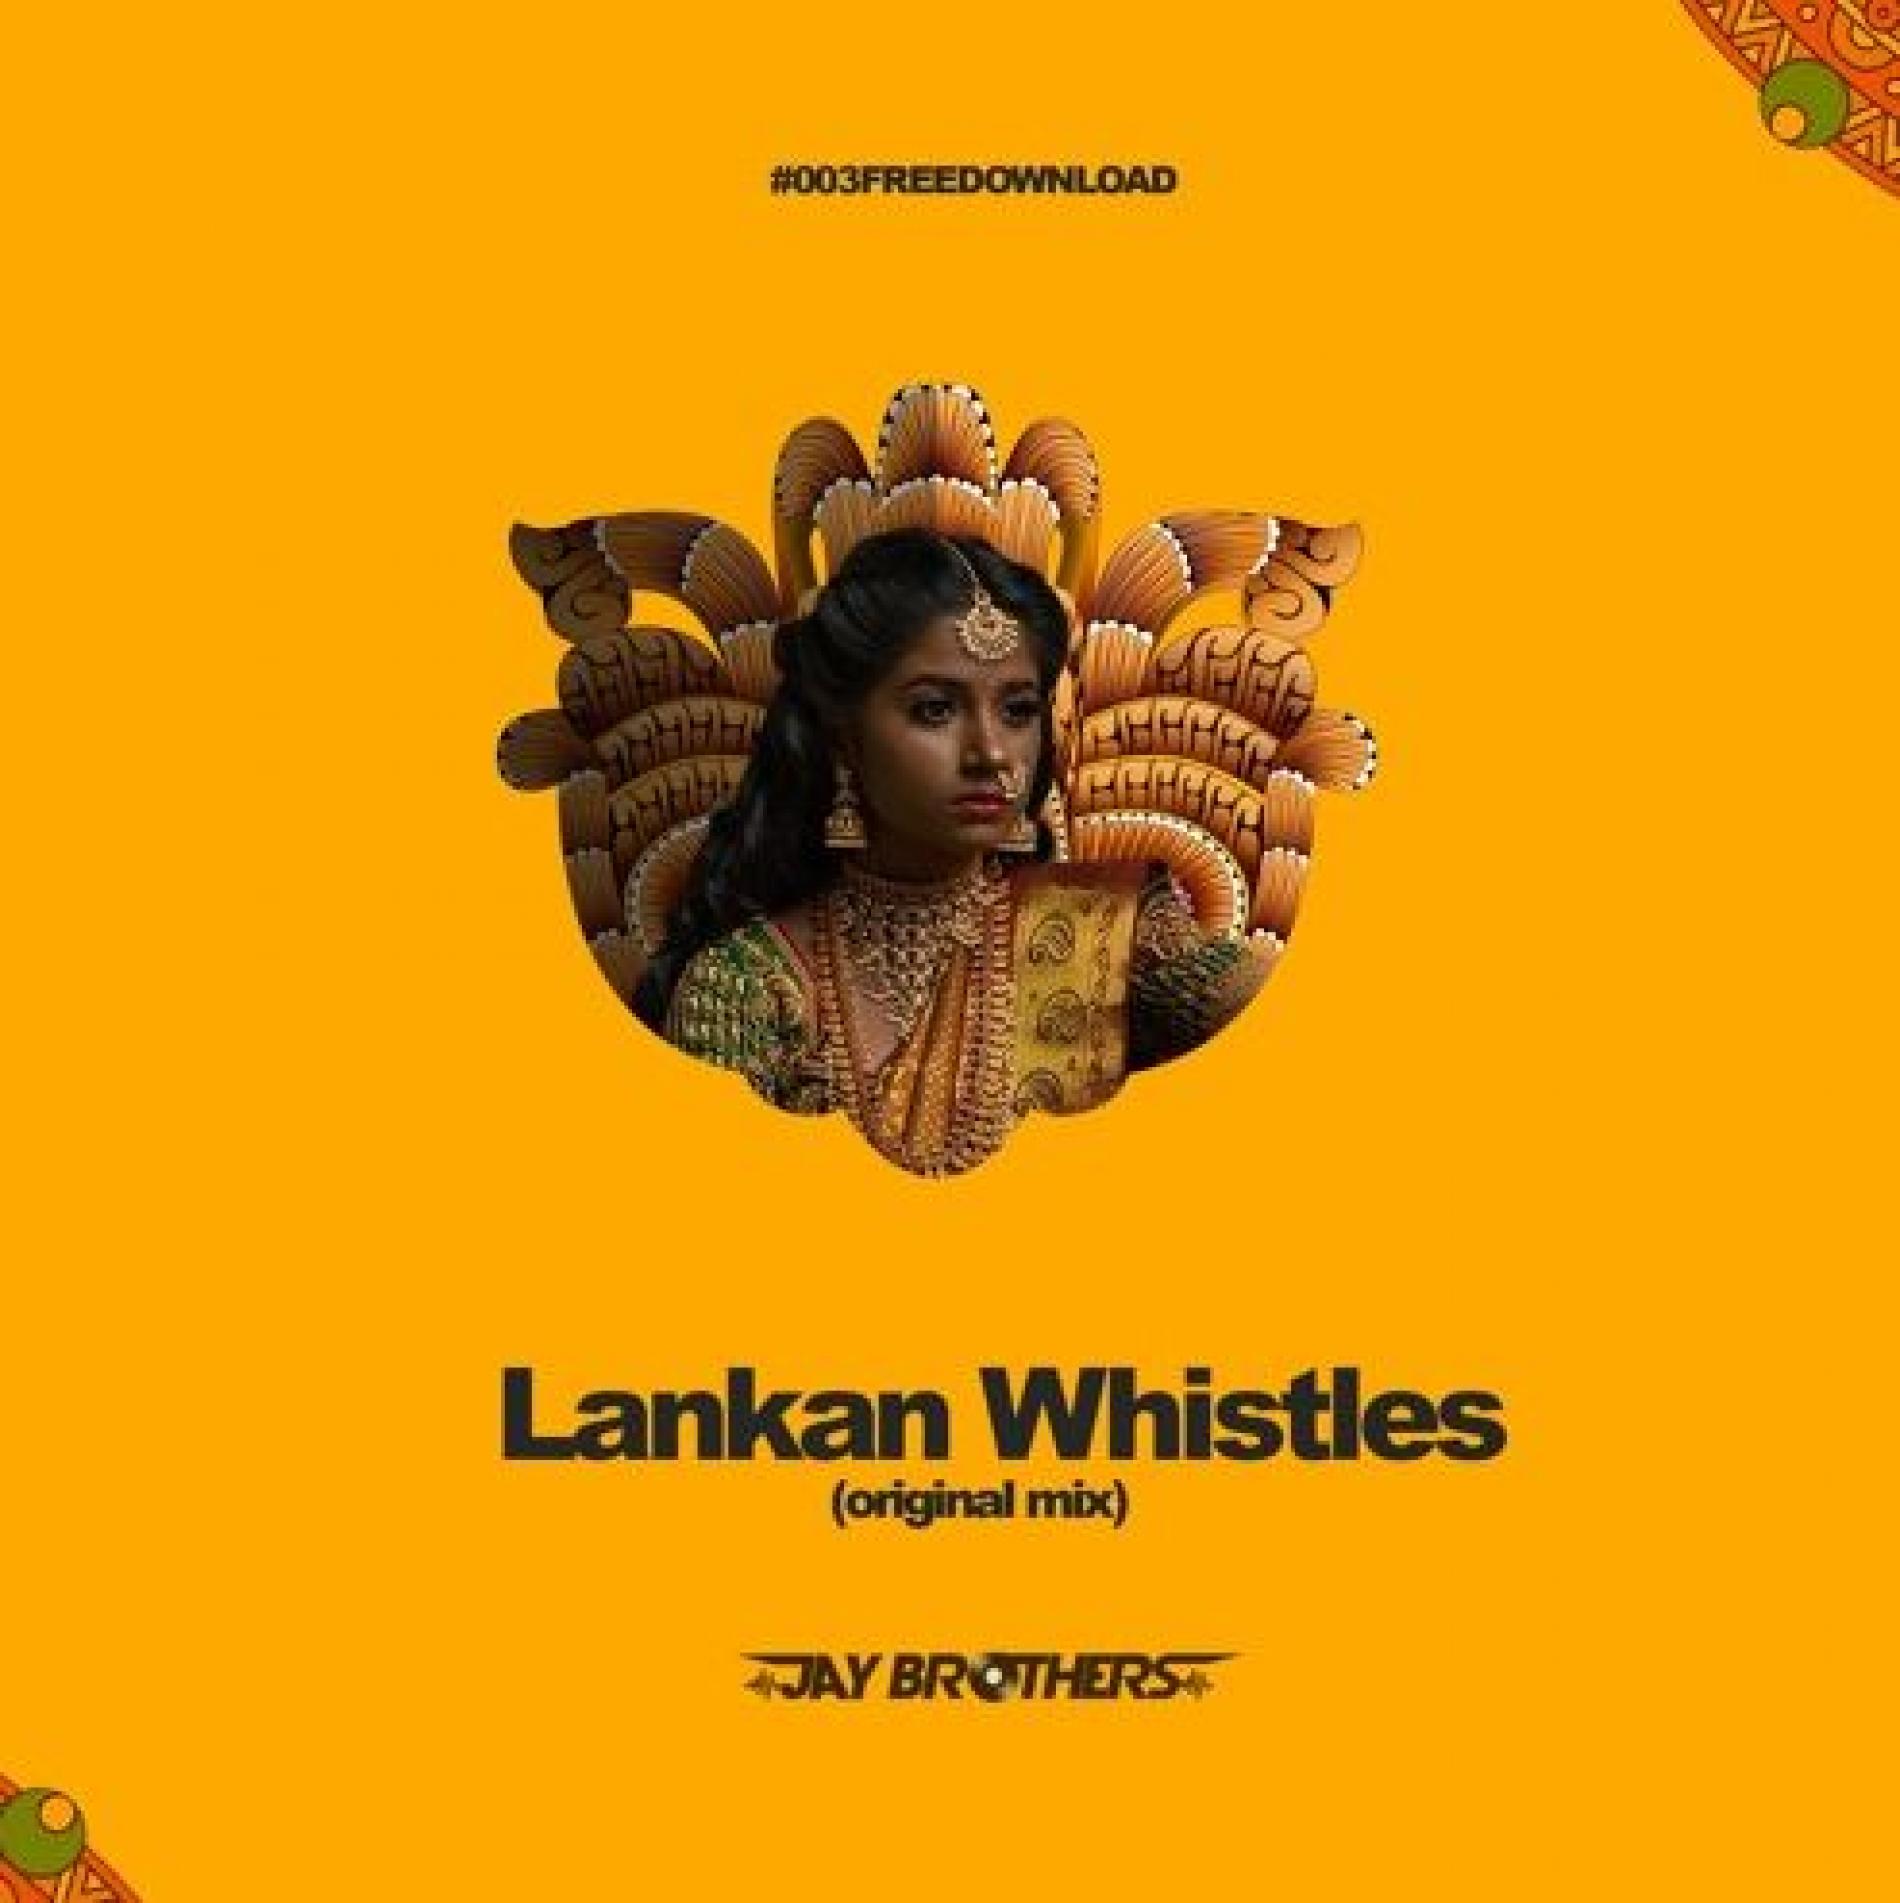 Jay Brothers – Lankan Whistles (FREEDOWNLOAD)